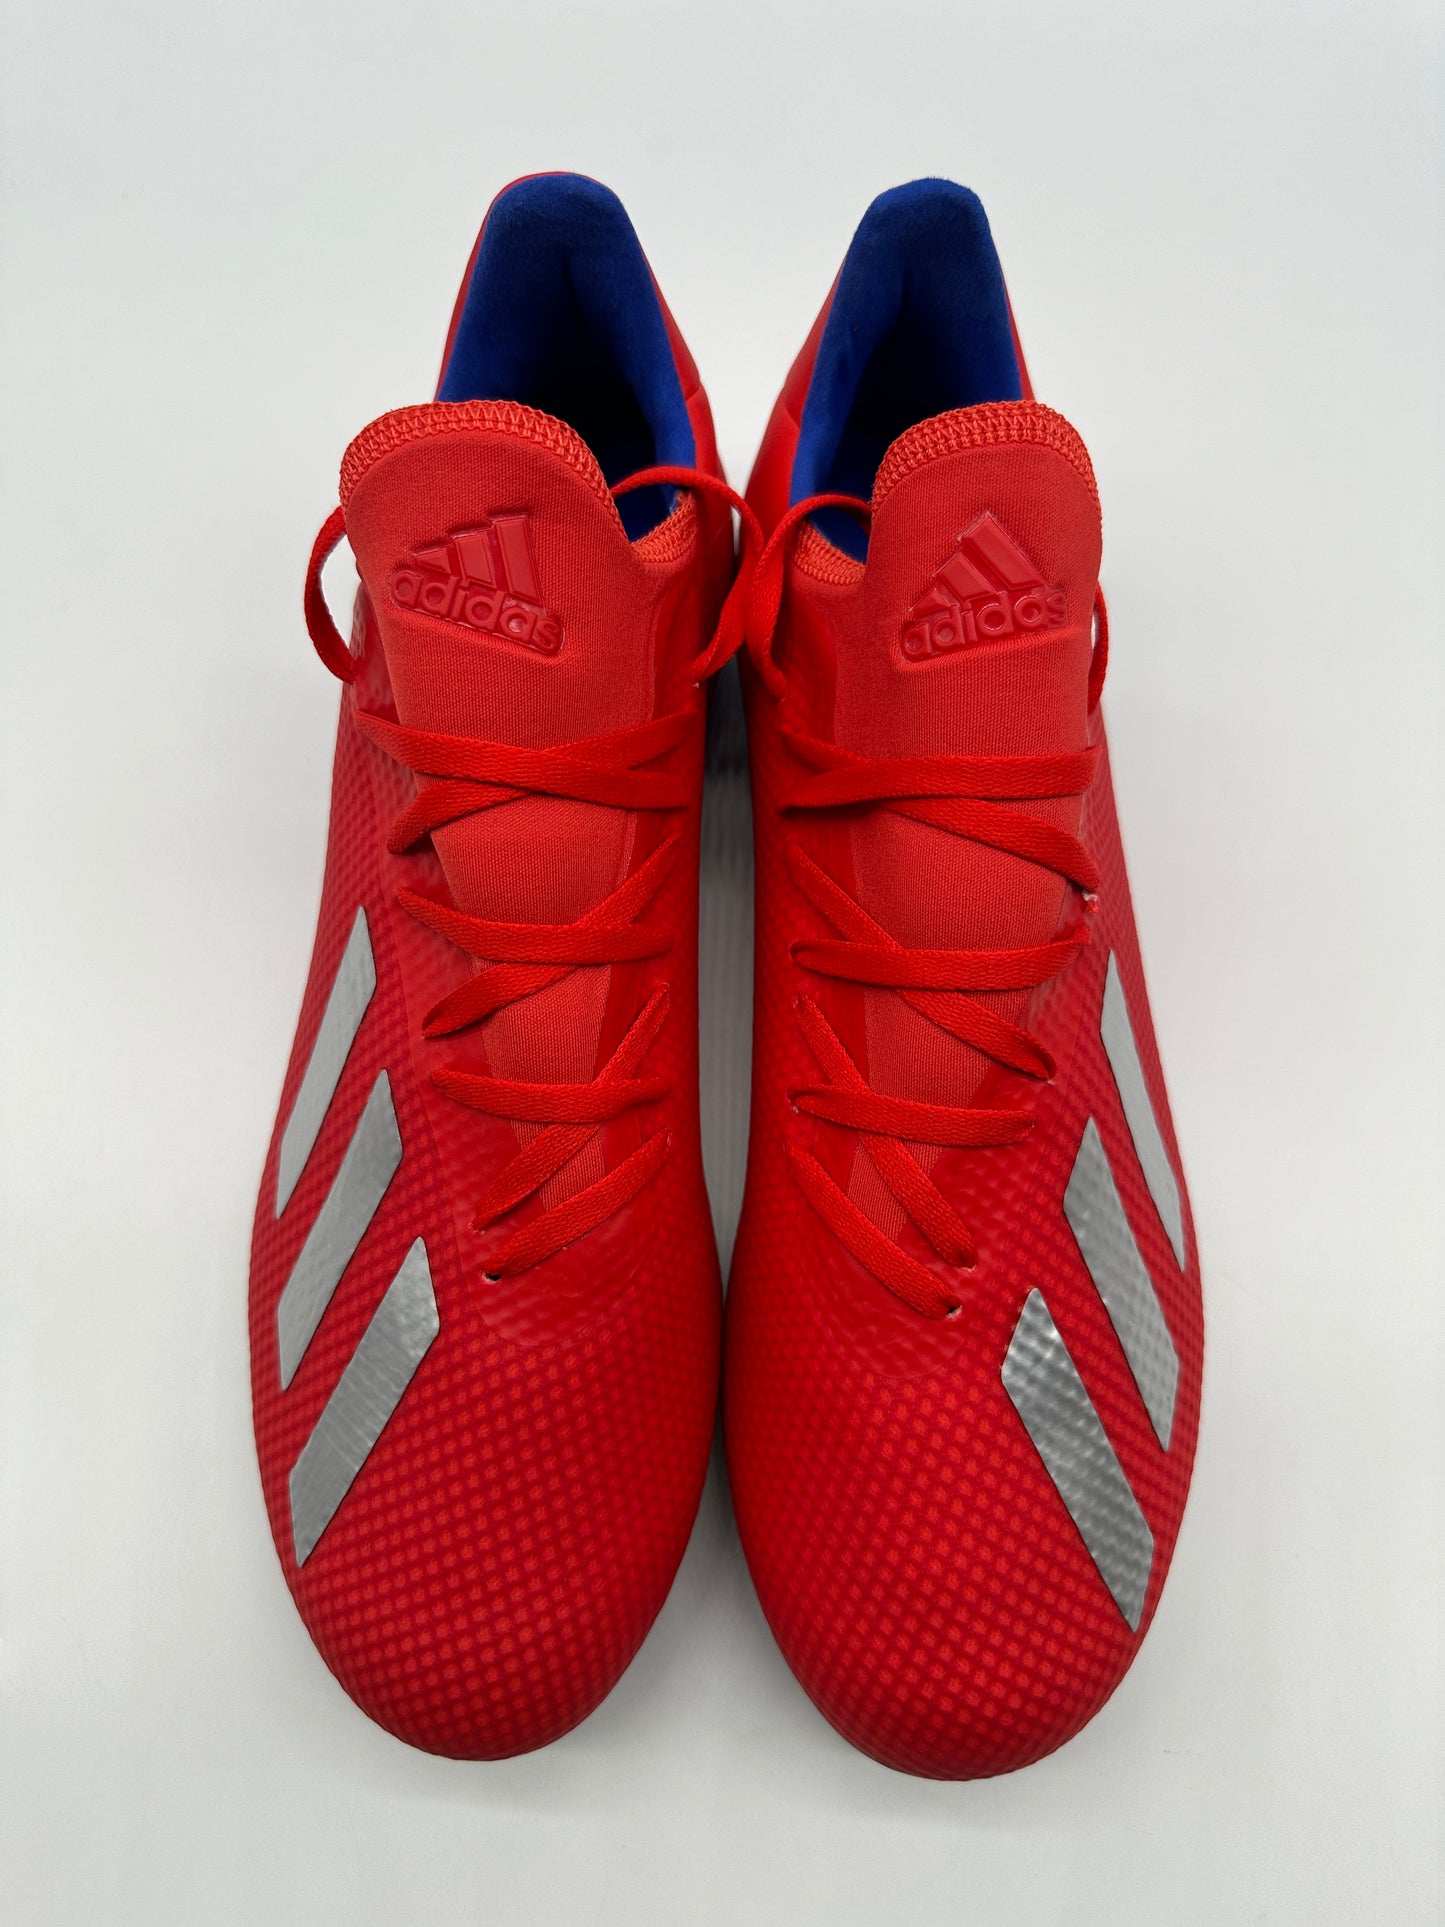 Adidas X 18.3 FG Red Blue